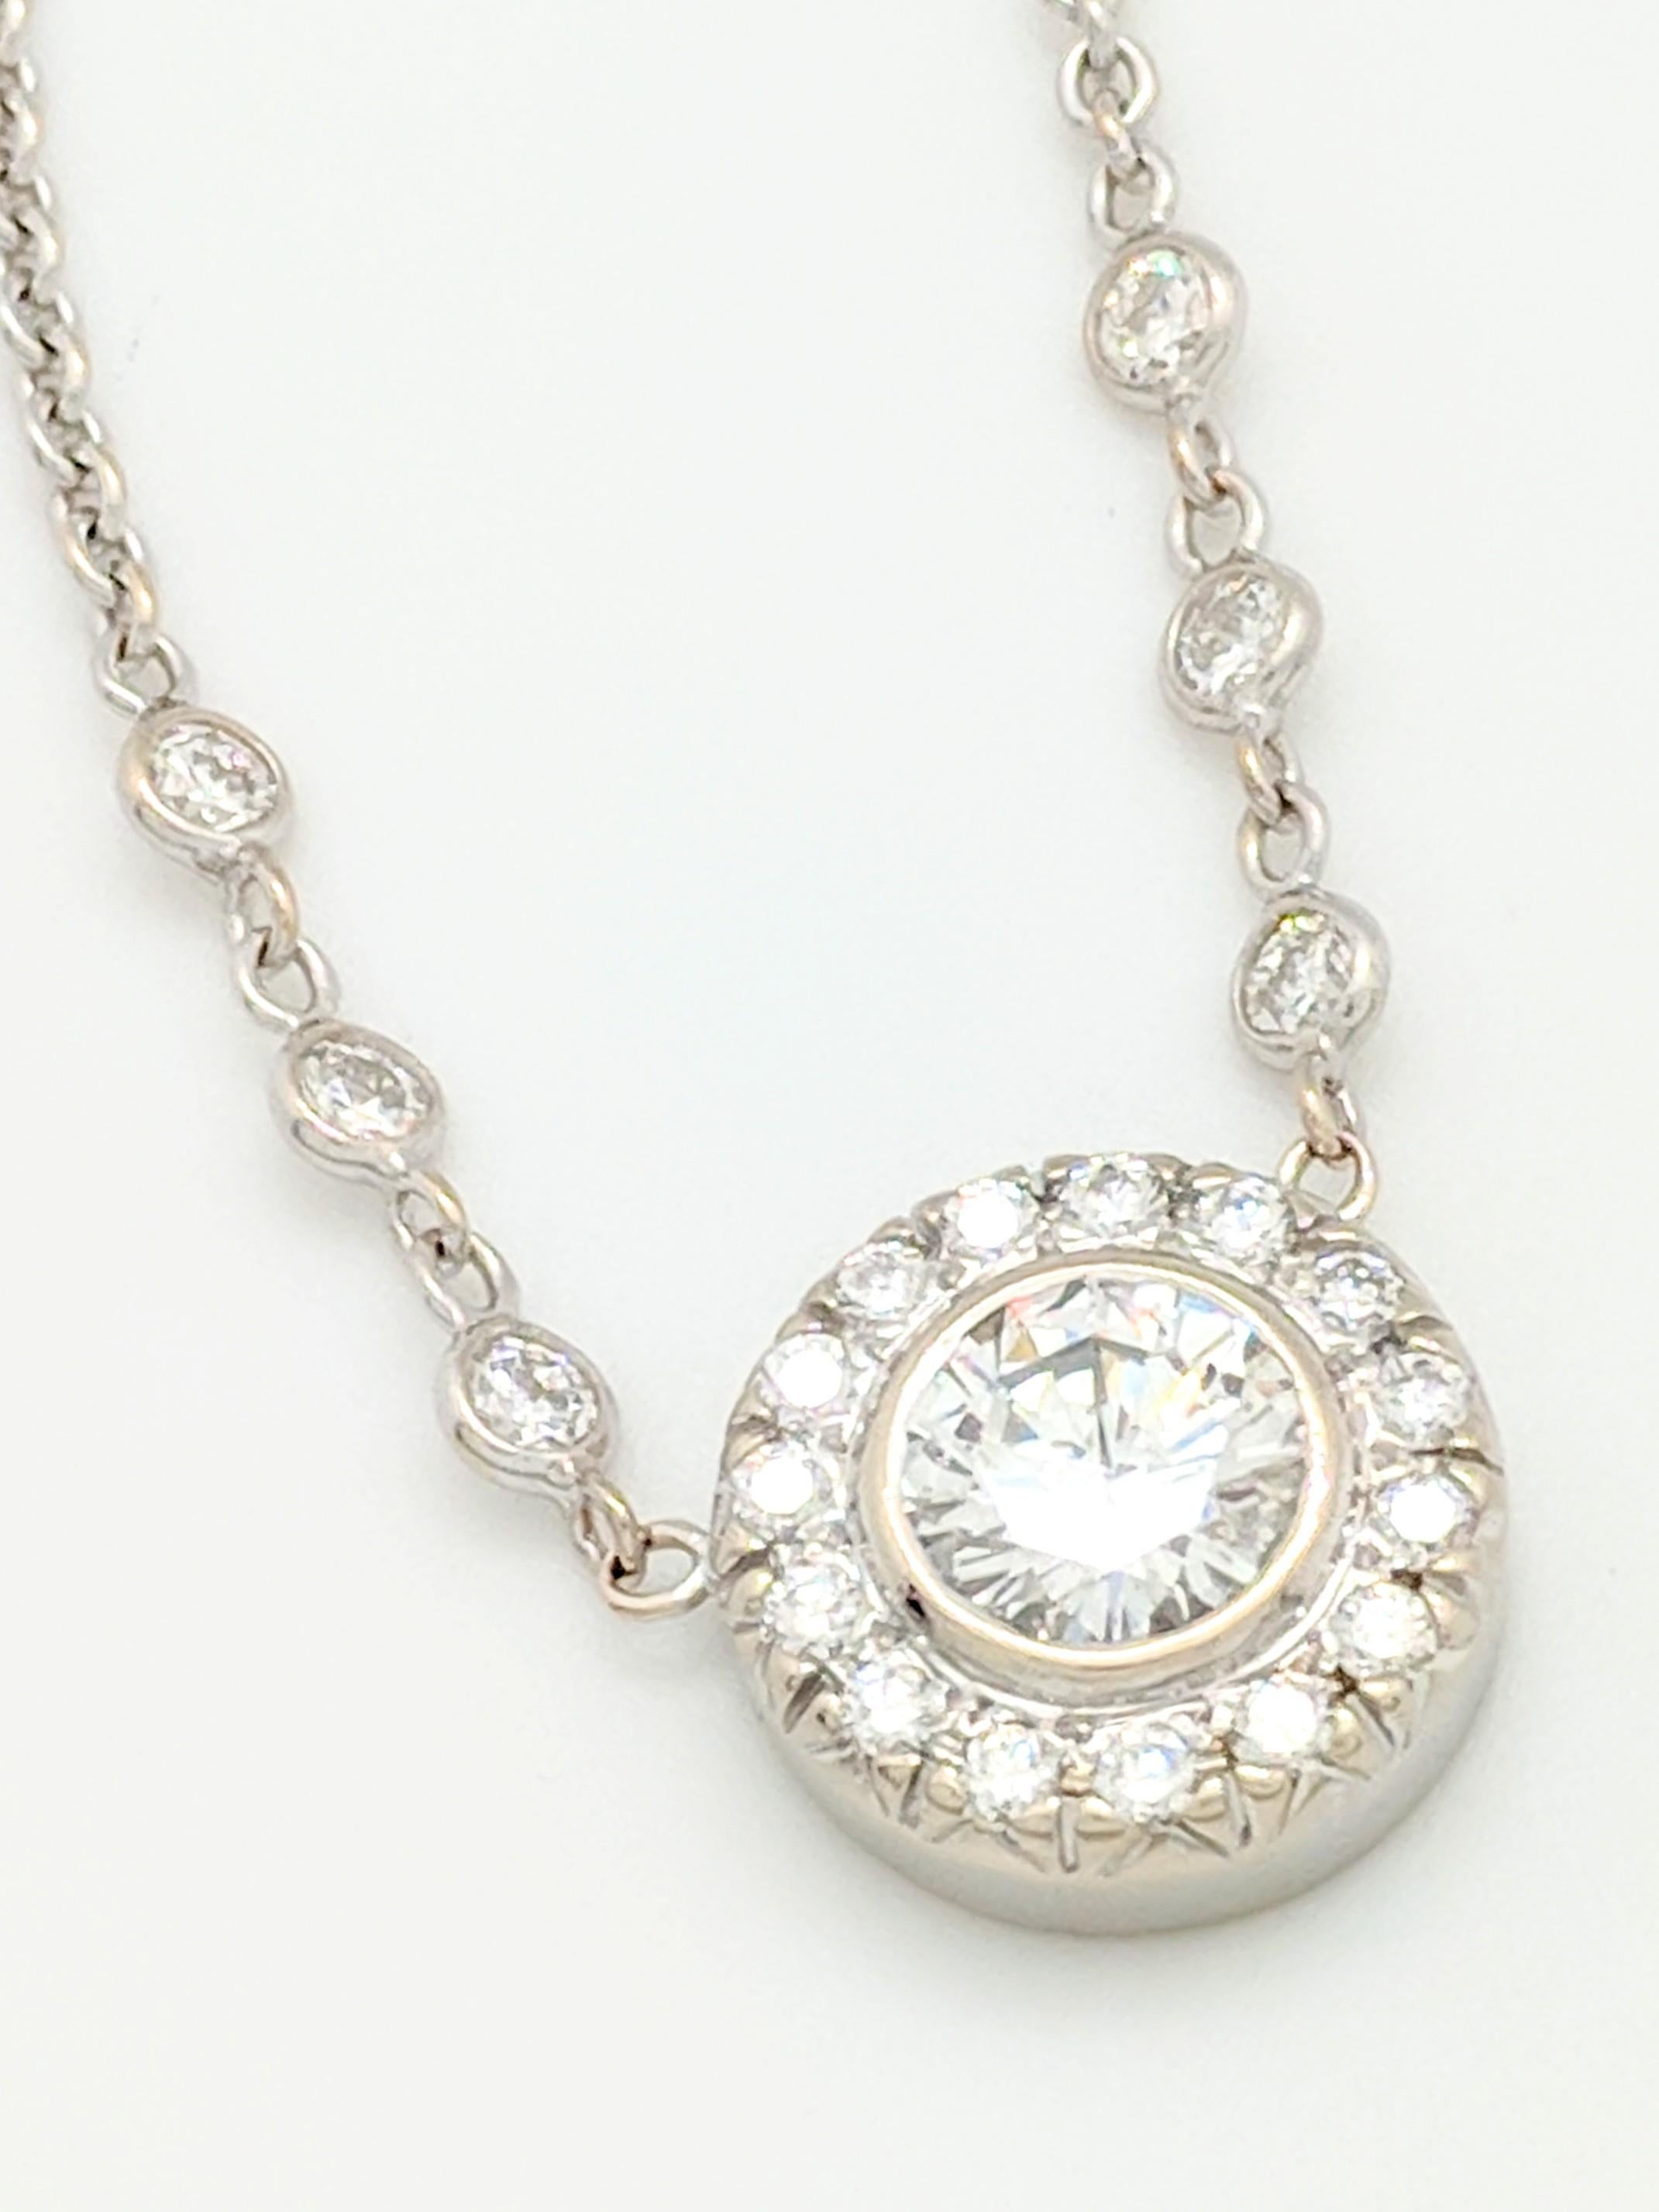 1.10 Carat Round Diamond Bezel Set in 18 Karat White Gold Halo Pendant Necklace 1